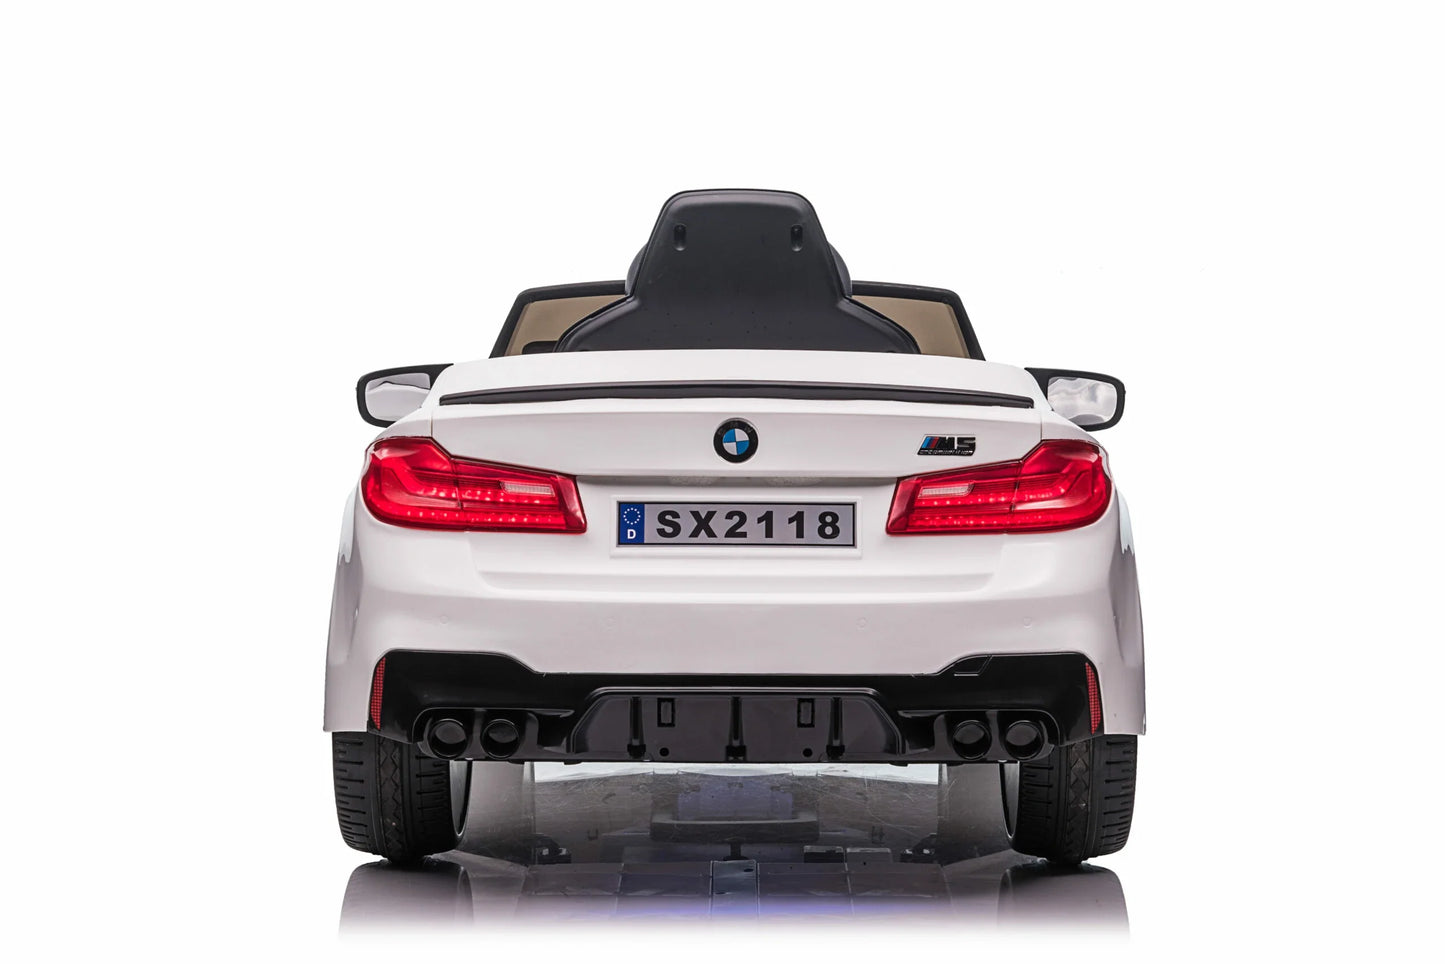 White BMW M5 Drift 24 Volt kids ride on car rear view against a white background